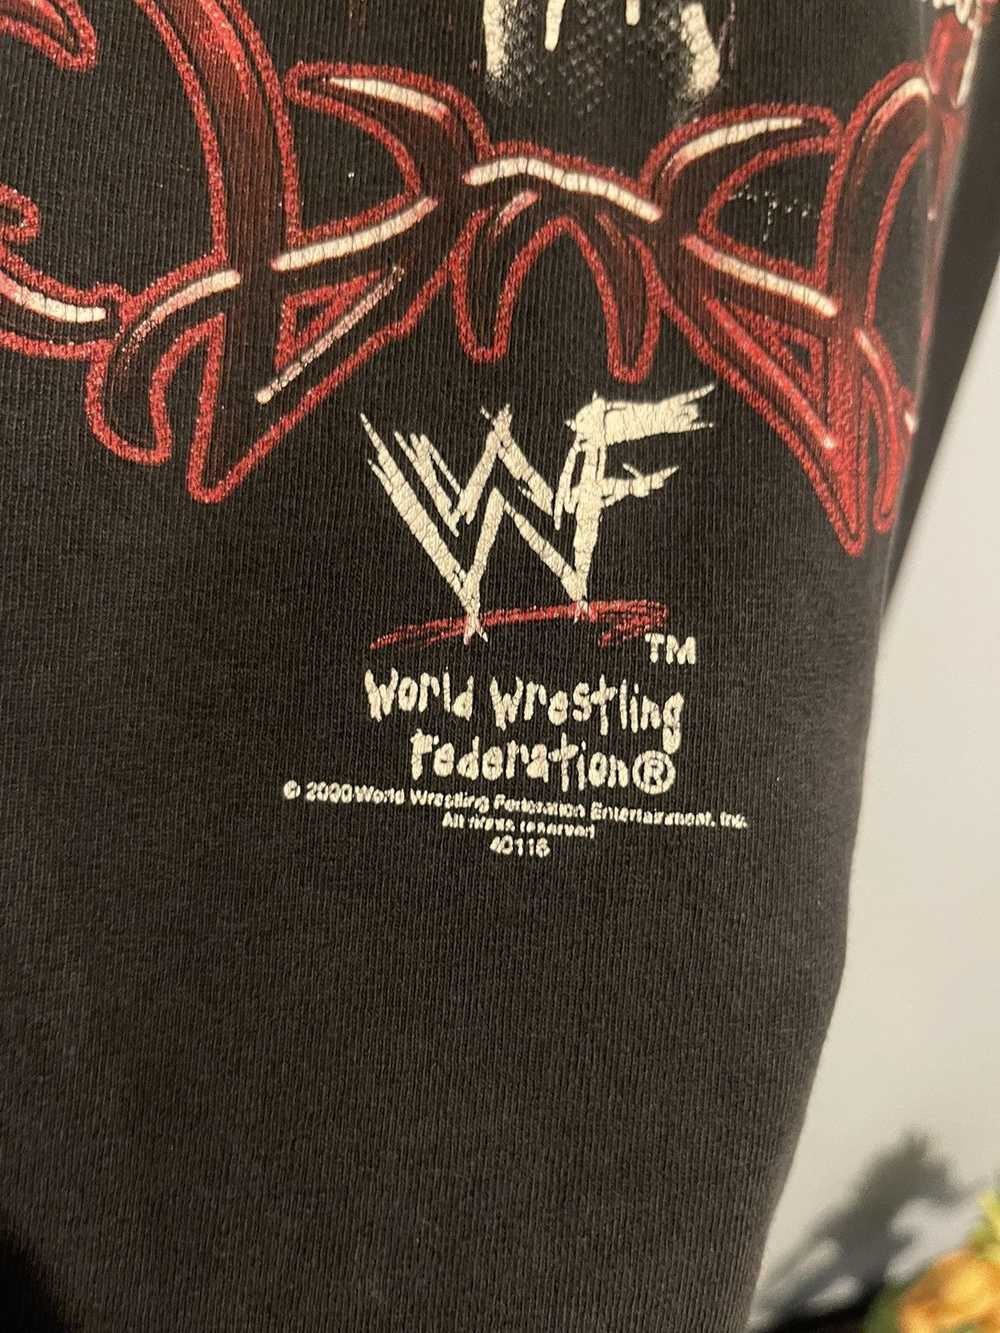 Vintage × Wwe × Wwf 2000 WWF Hardy Boyz Shirt - image 4